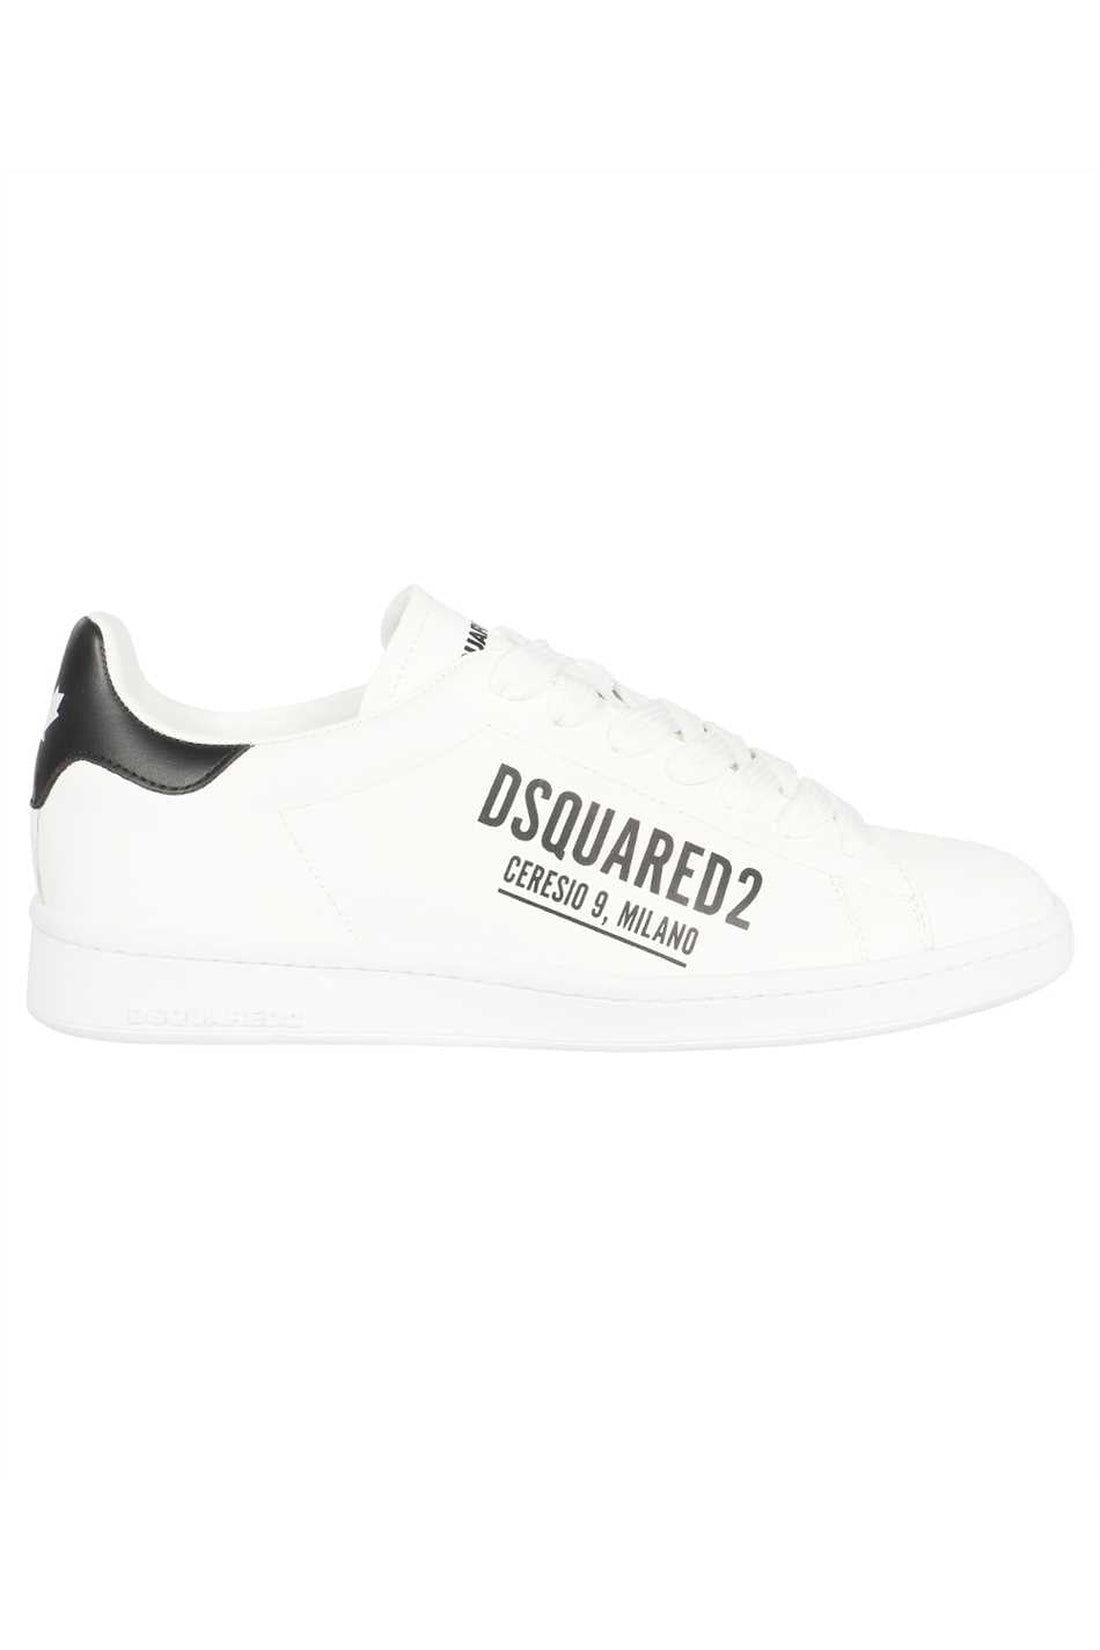 Dsquared2-OUTLET-SALE-Bumper low-top sneakers-ARCHIVIST